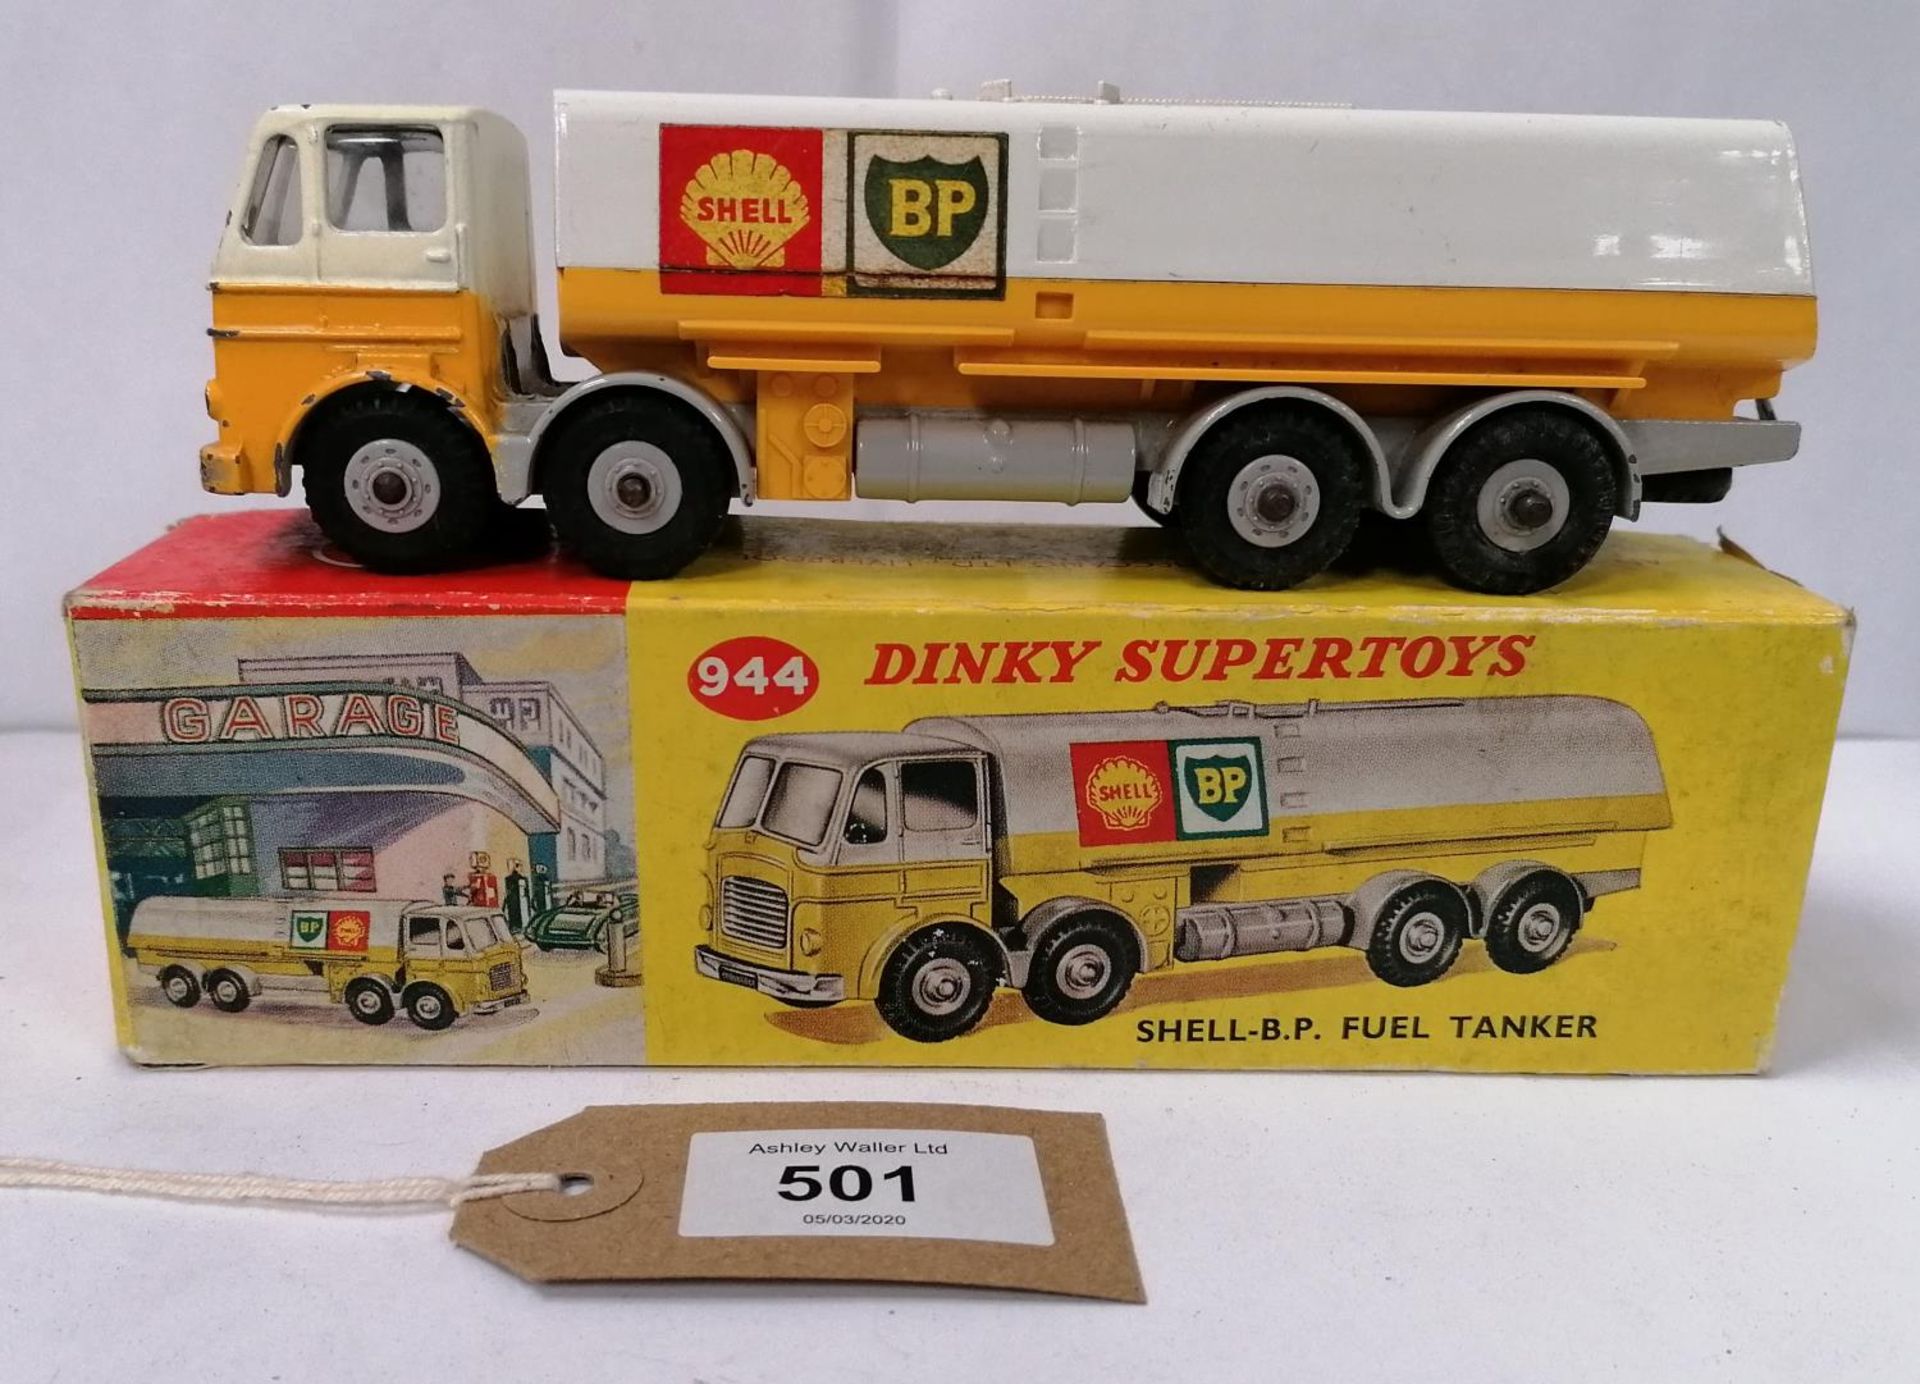 A DINKY SUPERTOYS SHELL BP TANKER IN ORIGINAL BOX - MODEL NUMBER 944